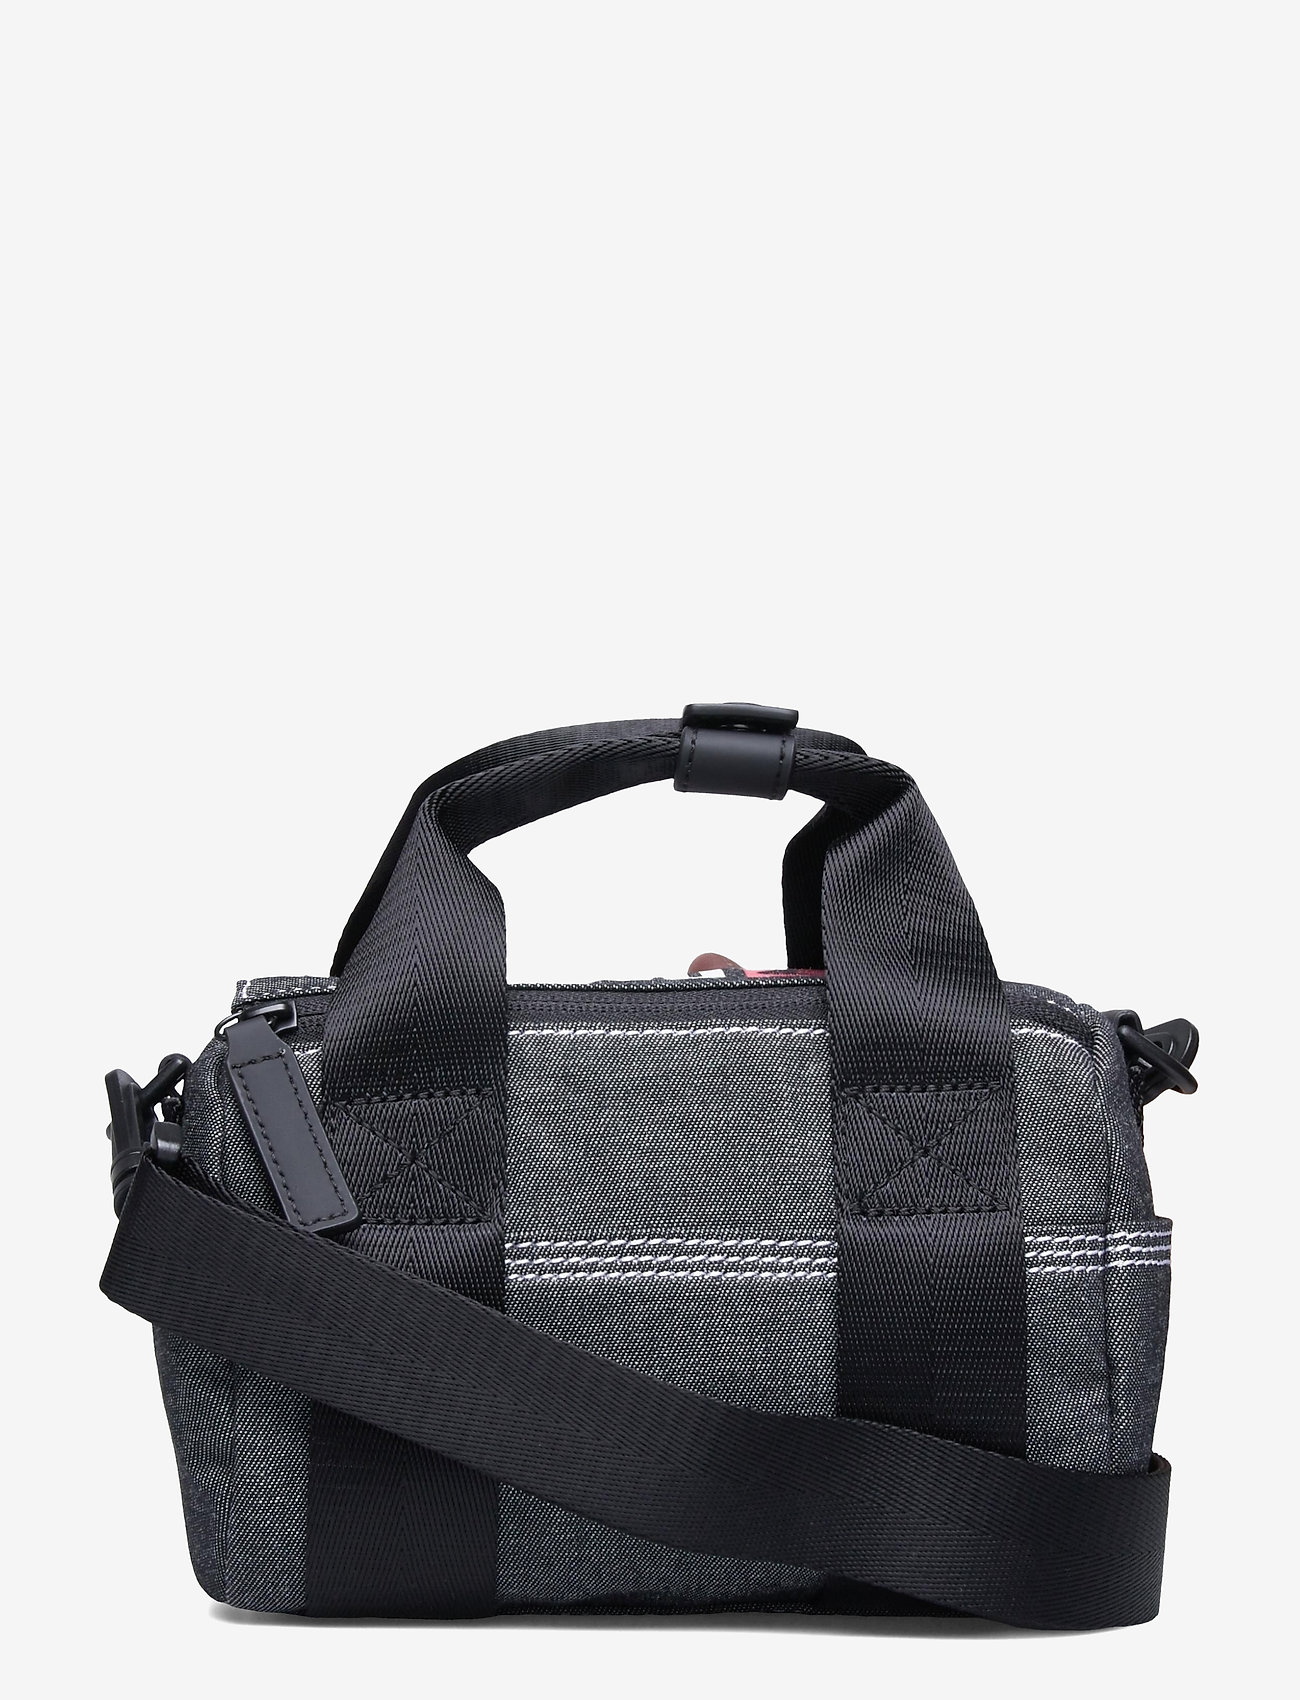 Diesel - MINI DUFFLE handbag - urheilukassit - black denim - 0